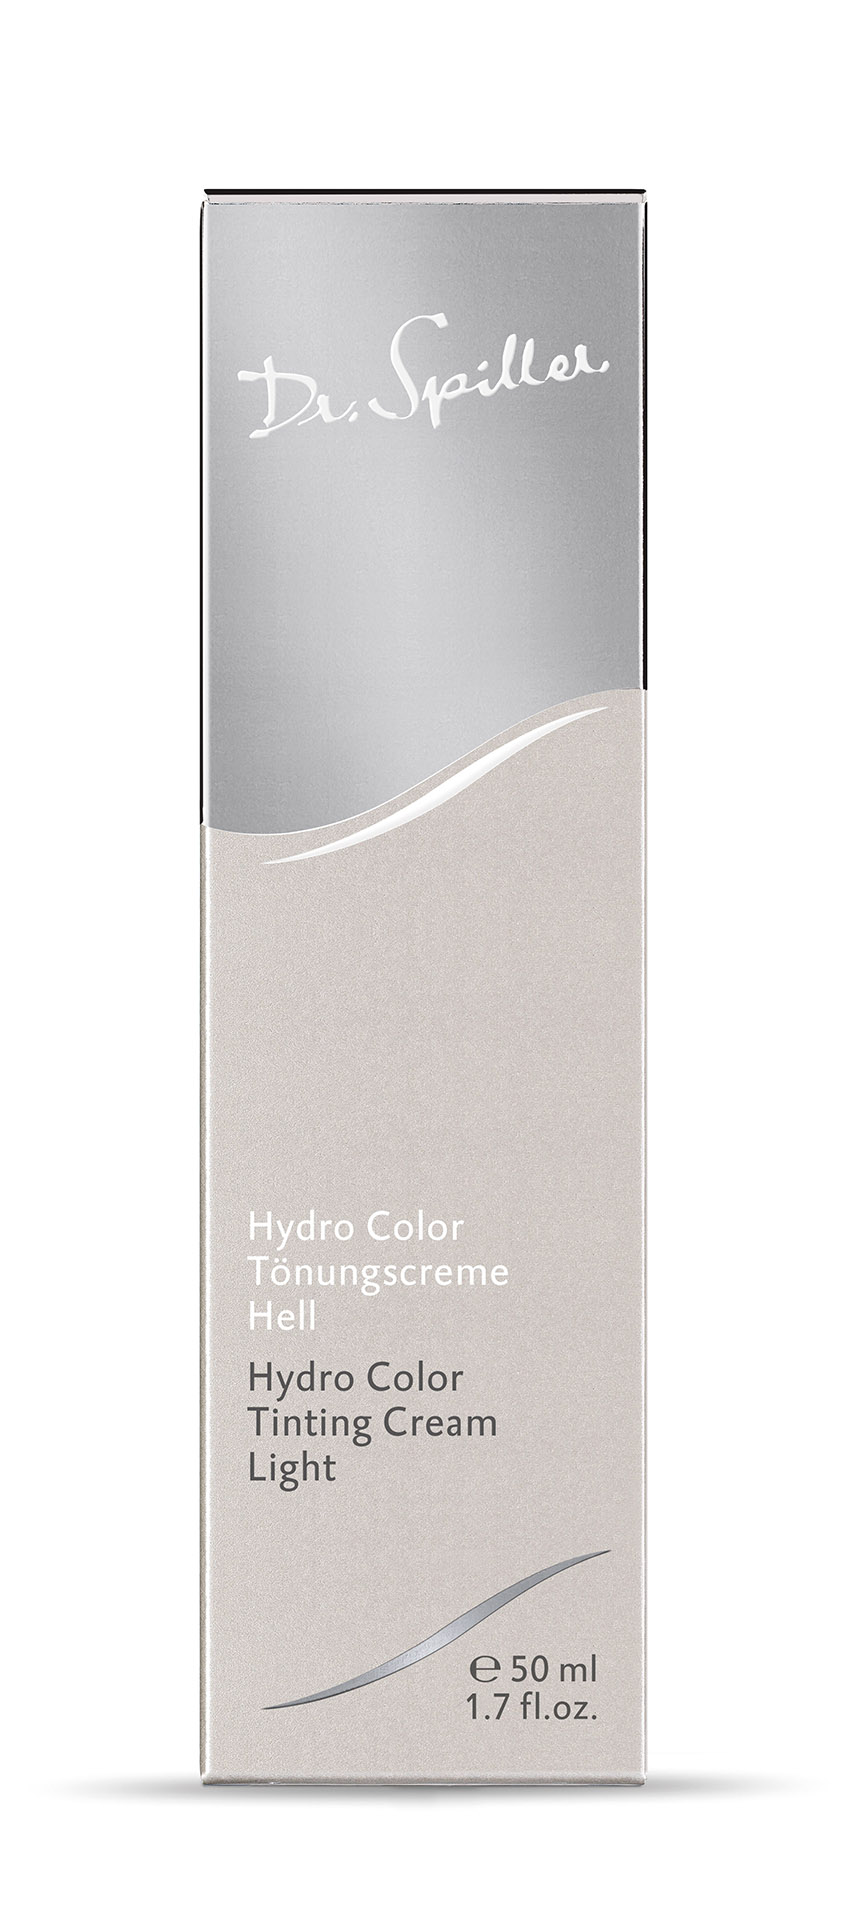 Hydro Color Tönungscreme hell 50 ml